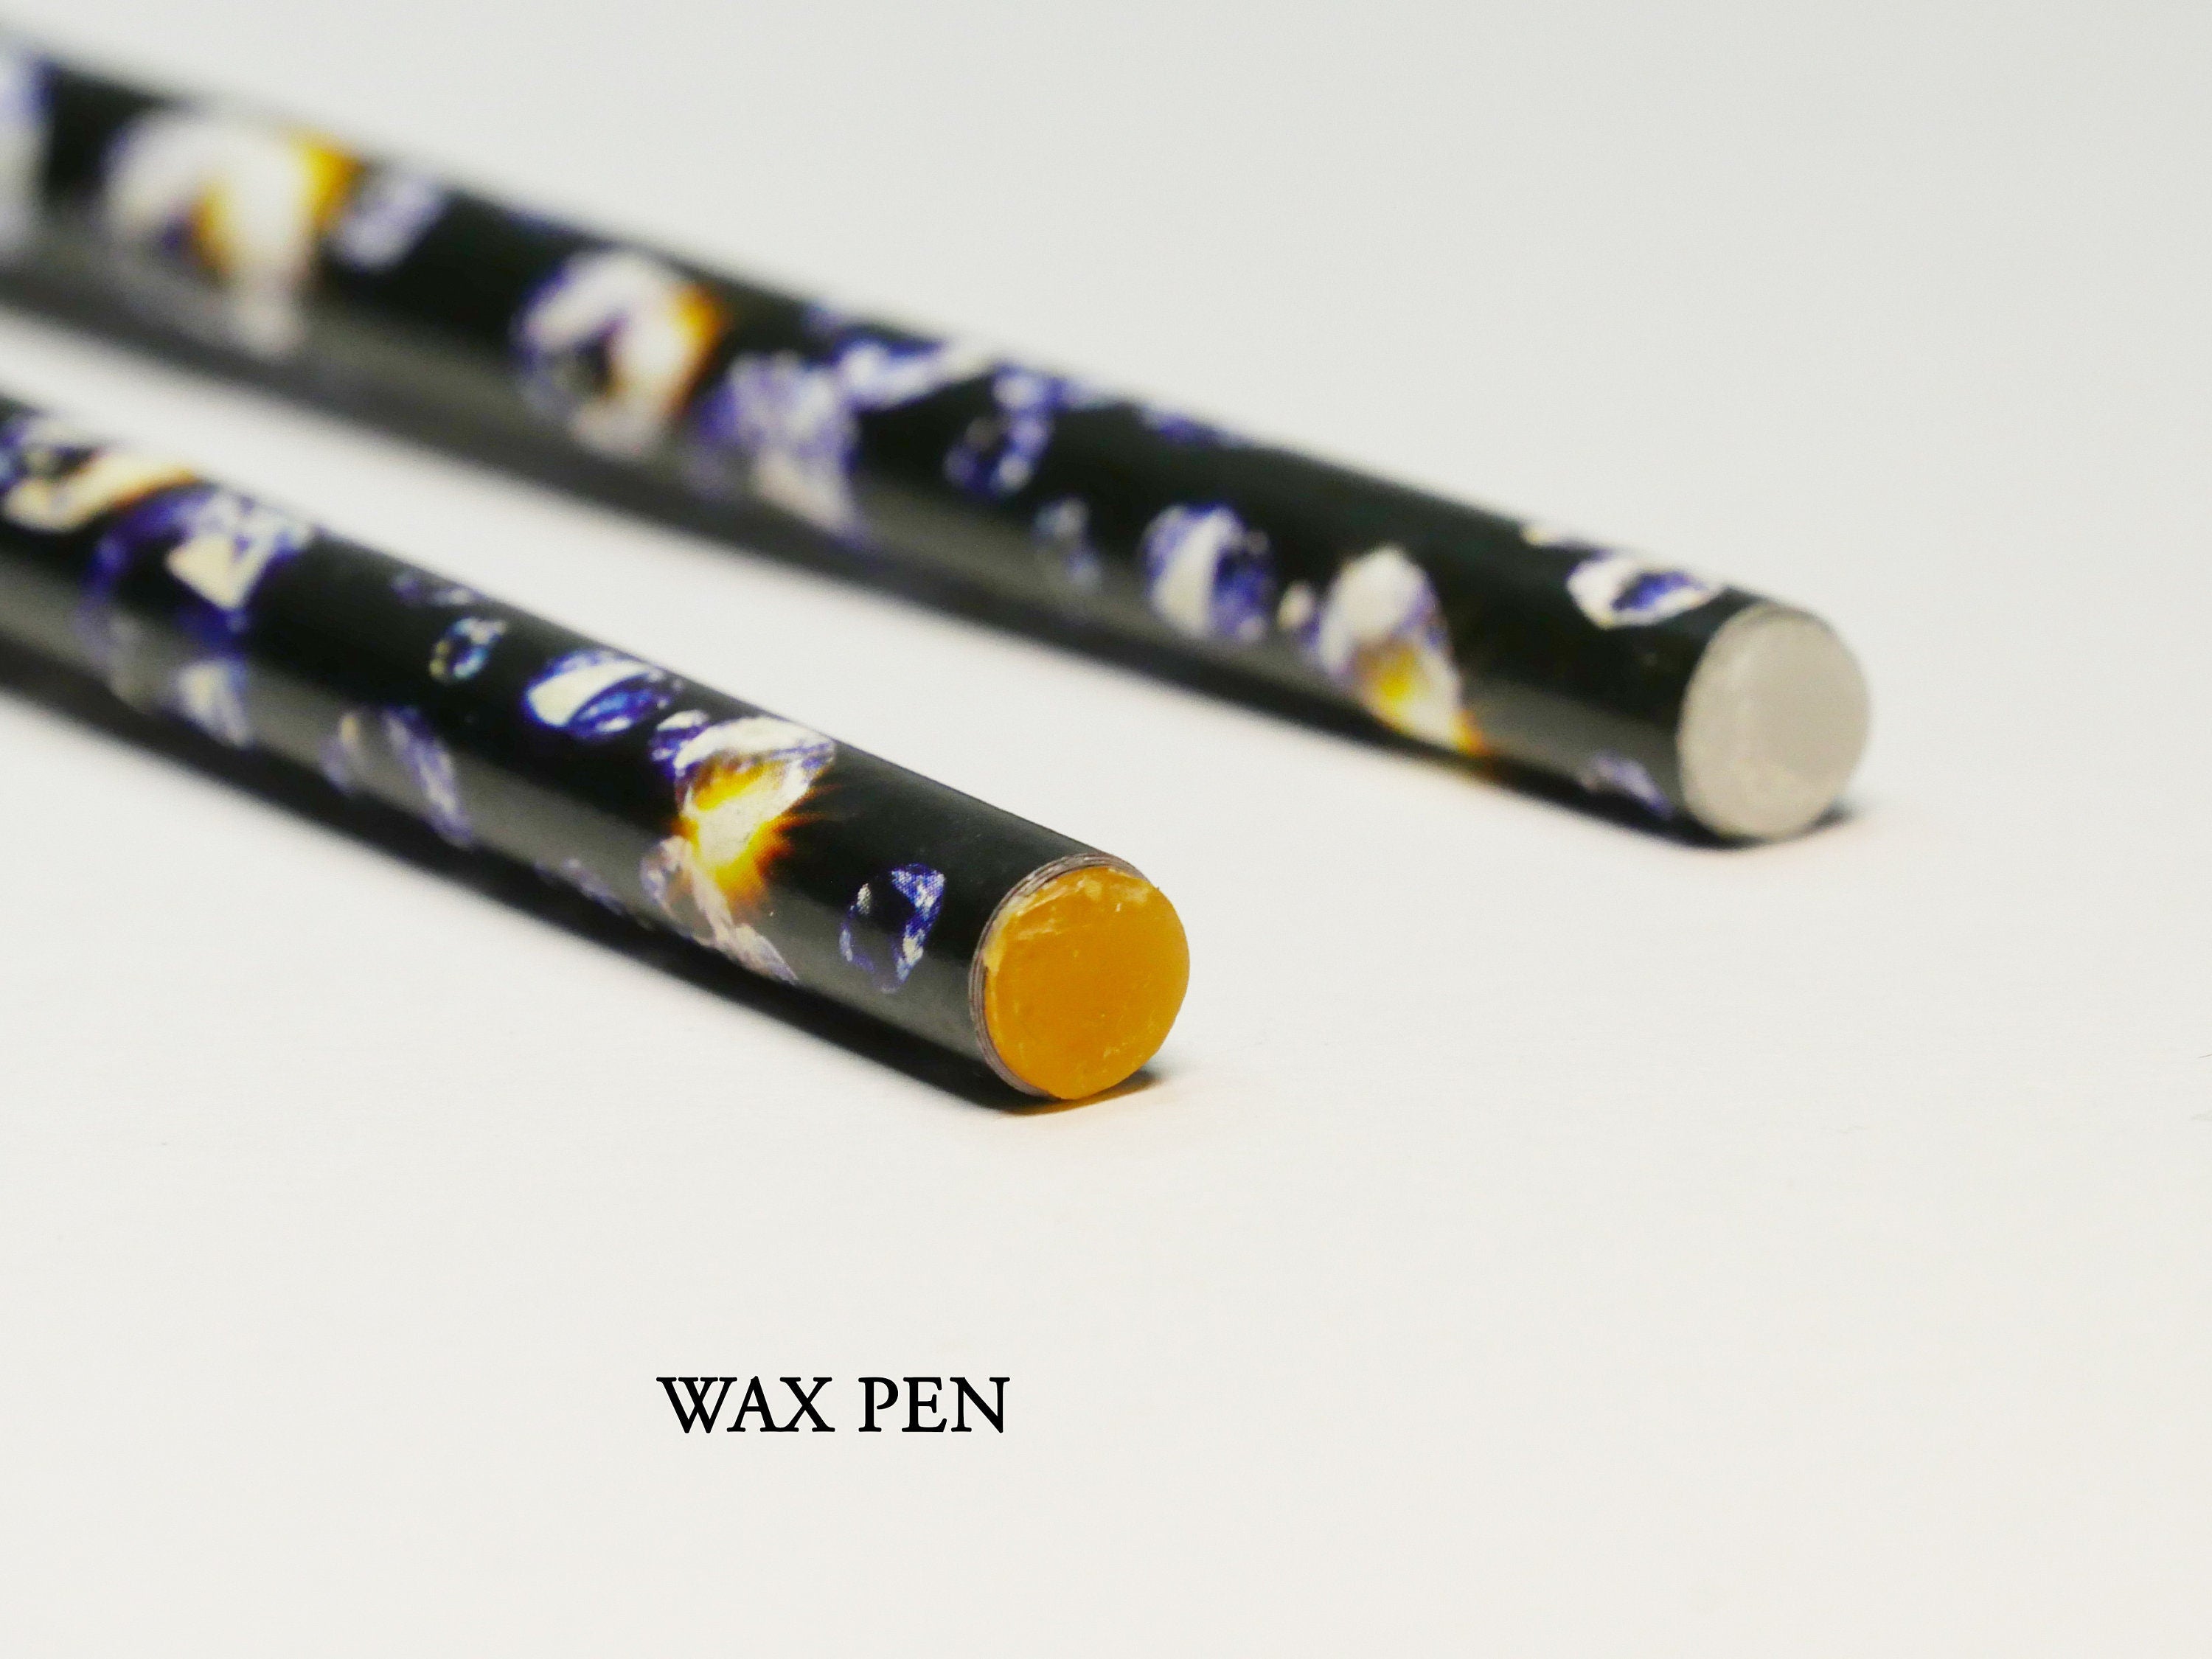 Kaychan Wax Pencil for Rhinestones Wax Pen Rhinestone Picker Dotting Pen 2 Pieces Acrylic Handle Dual-Ended Rhinestones Pen Applicator Jewel Picker Tool with